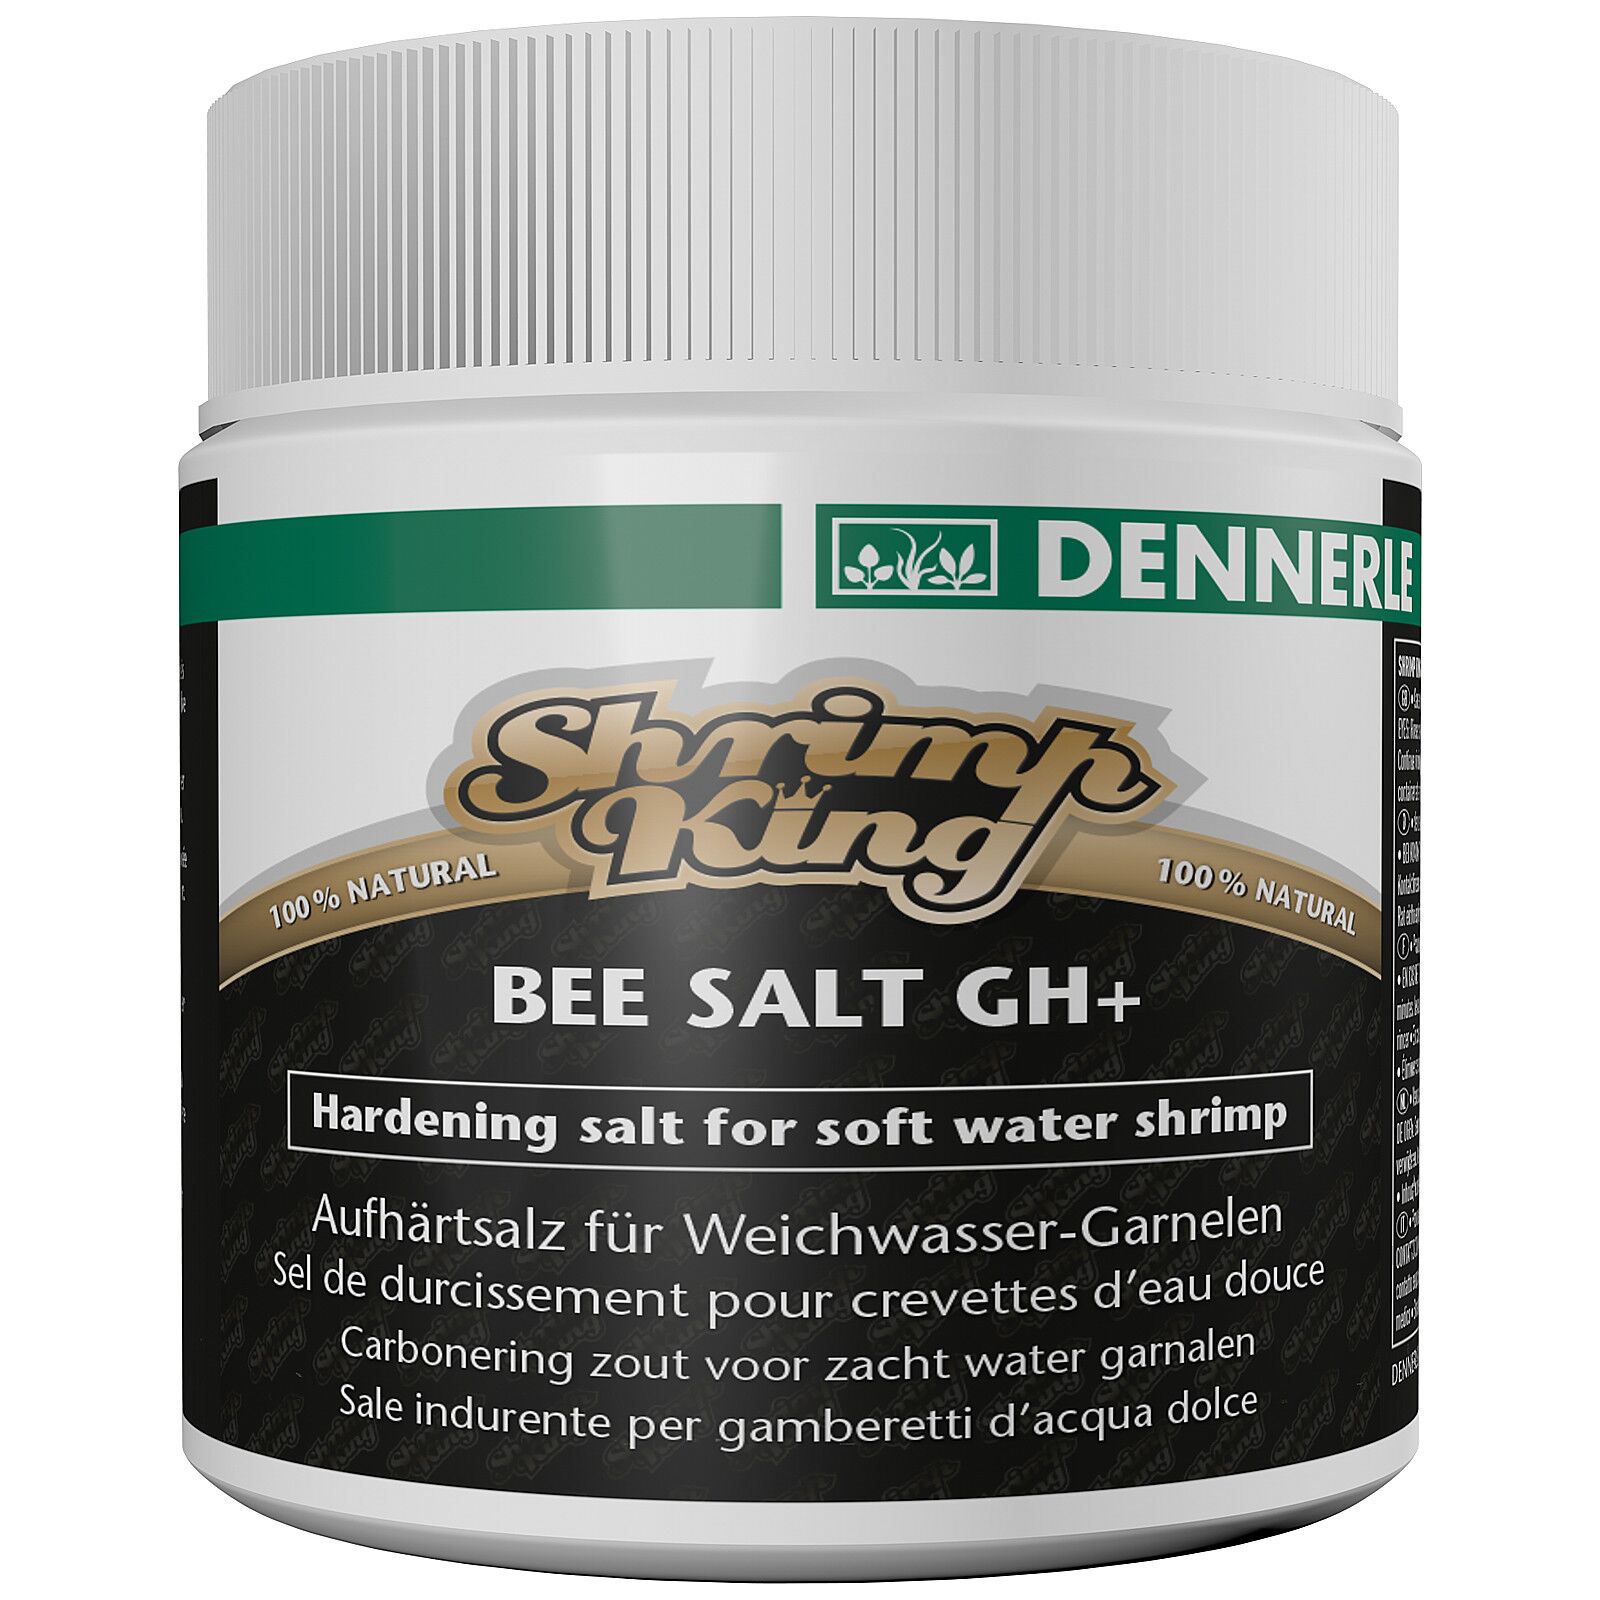 Dennerle - Shrimp King - Bee Salt GH+ - 200 g - B-Ware